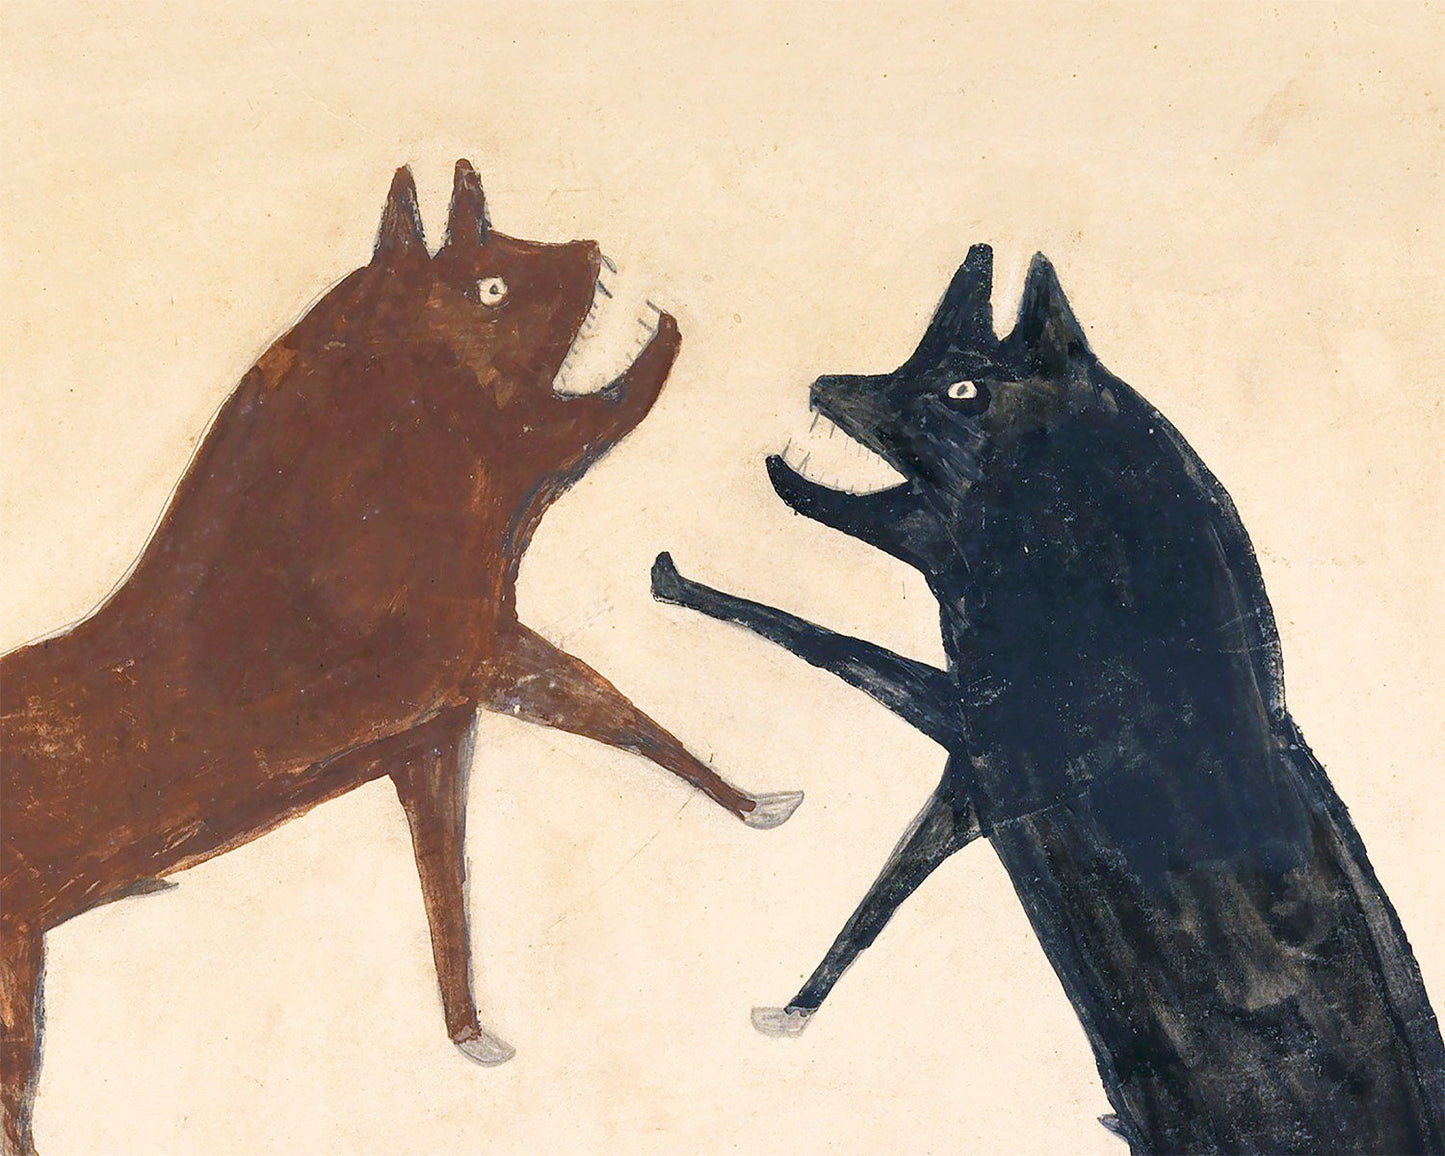 Two dogs fighting | Bill Traylor Americana art | Animal folk art | African American self-taught artist | Modern vintage wall décor